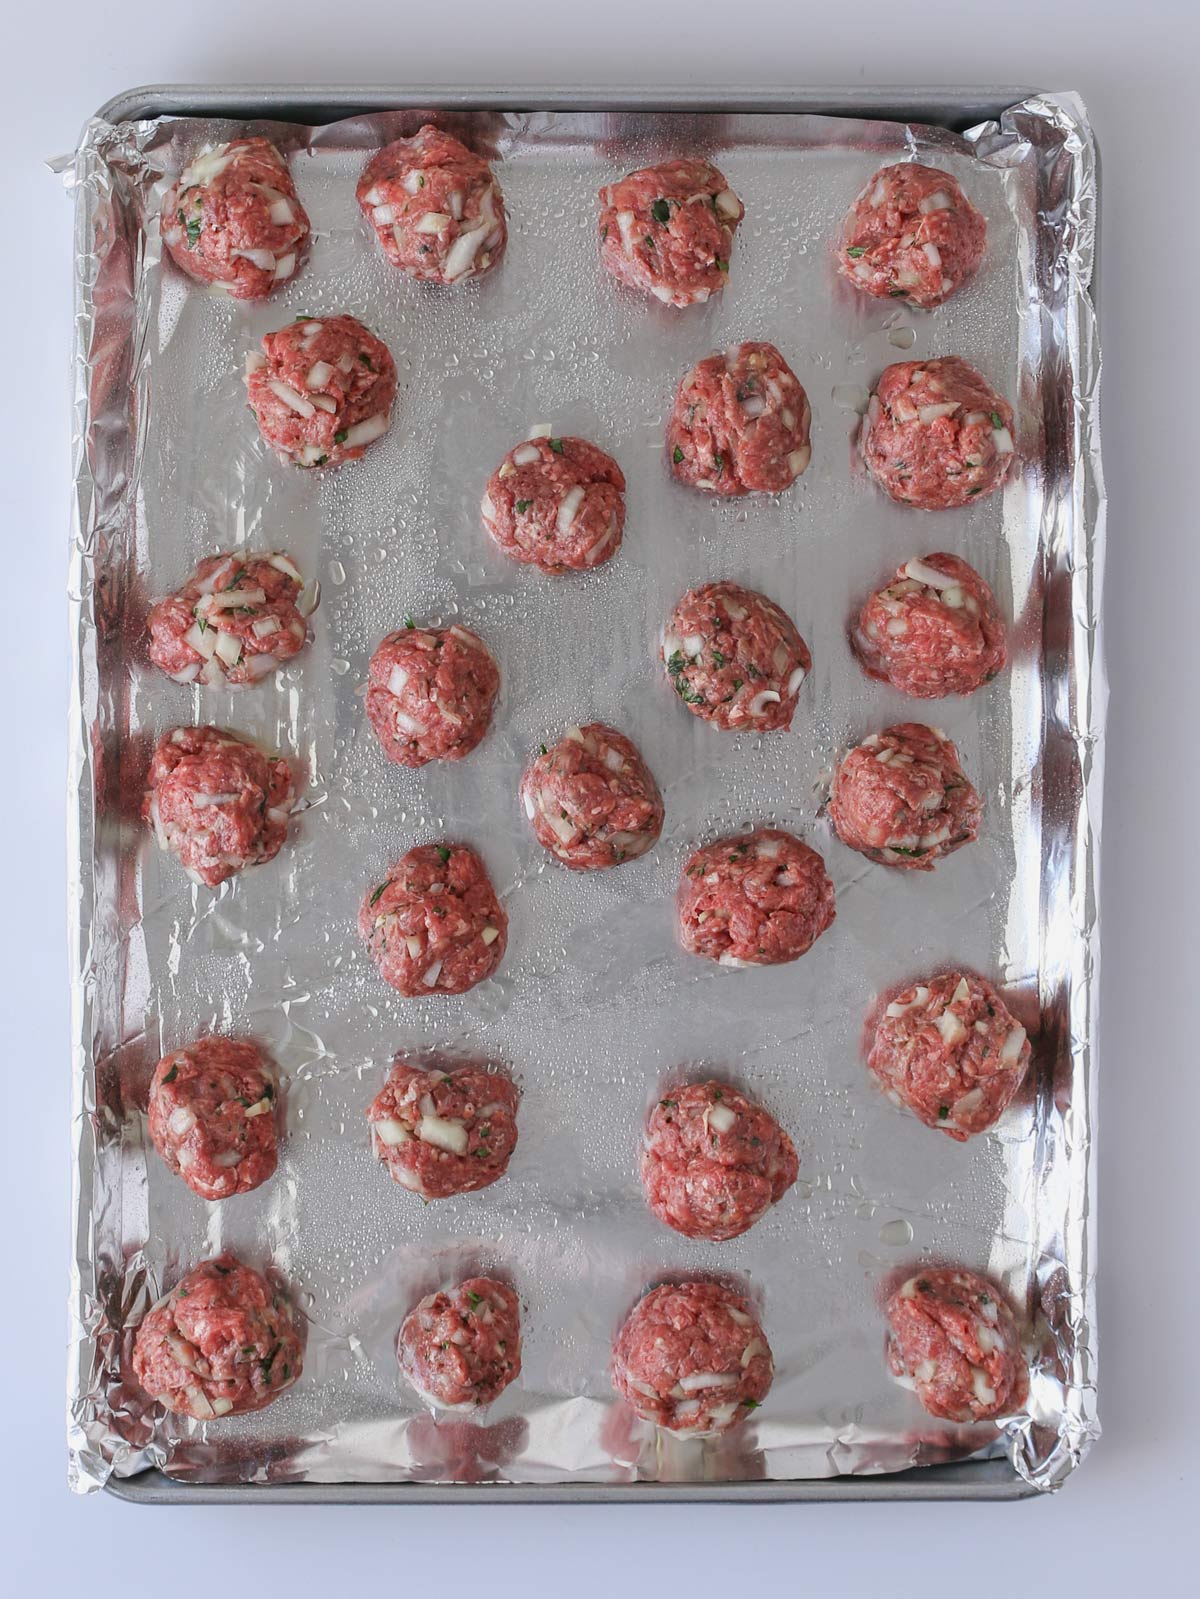 meatballs formed on lined baking sheet.